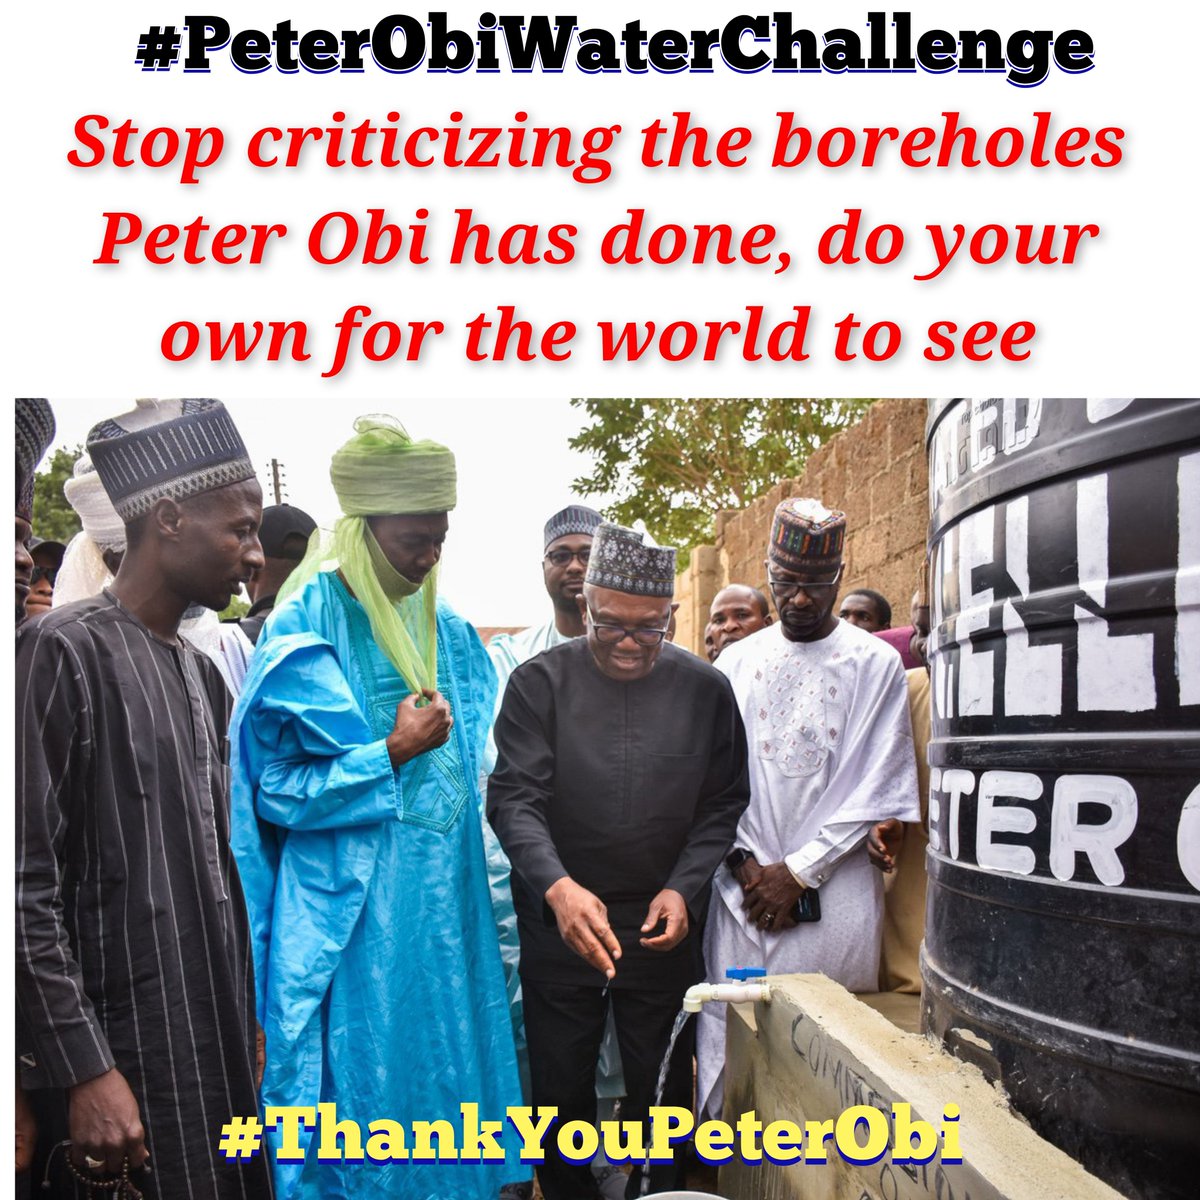 If you come across this, just retweet! #PeterObiWaterChallenge #ThankYouPeterObi